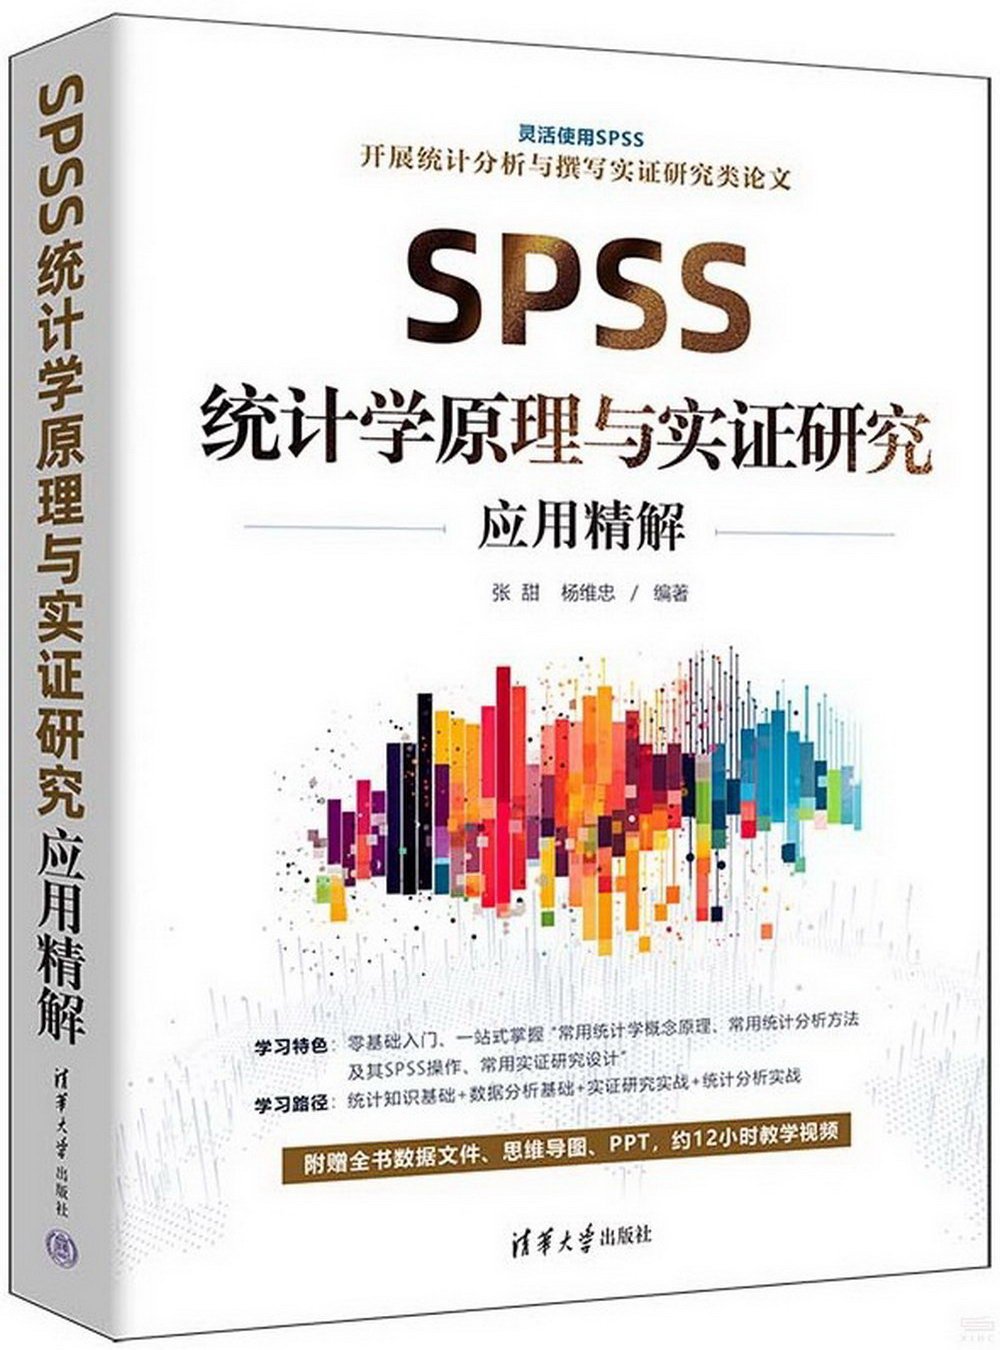 SPSS統計學原理與實證研究應用精解